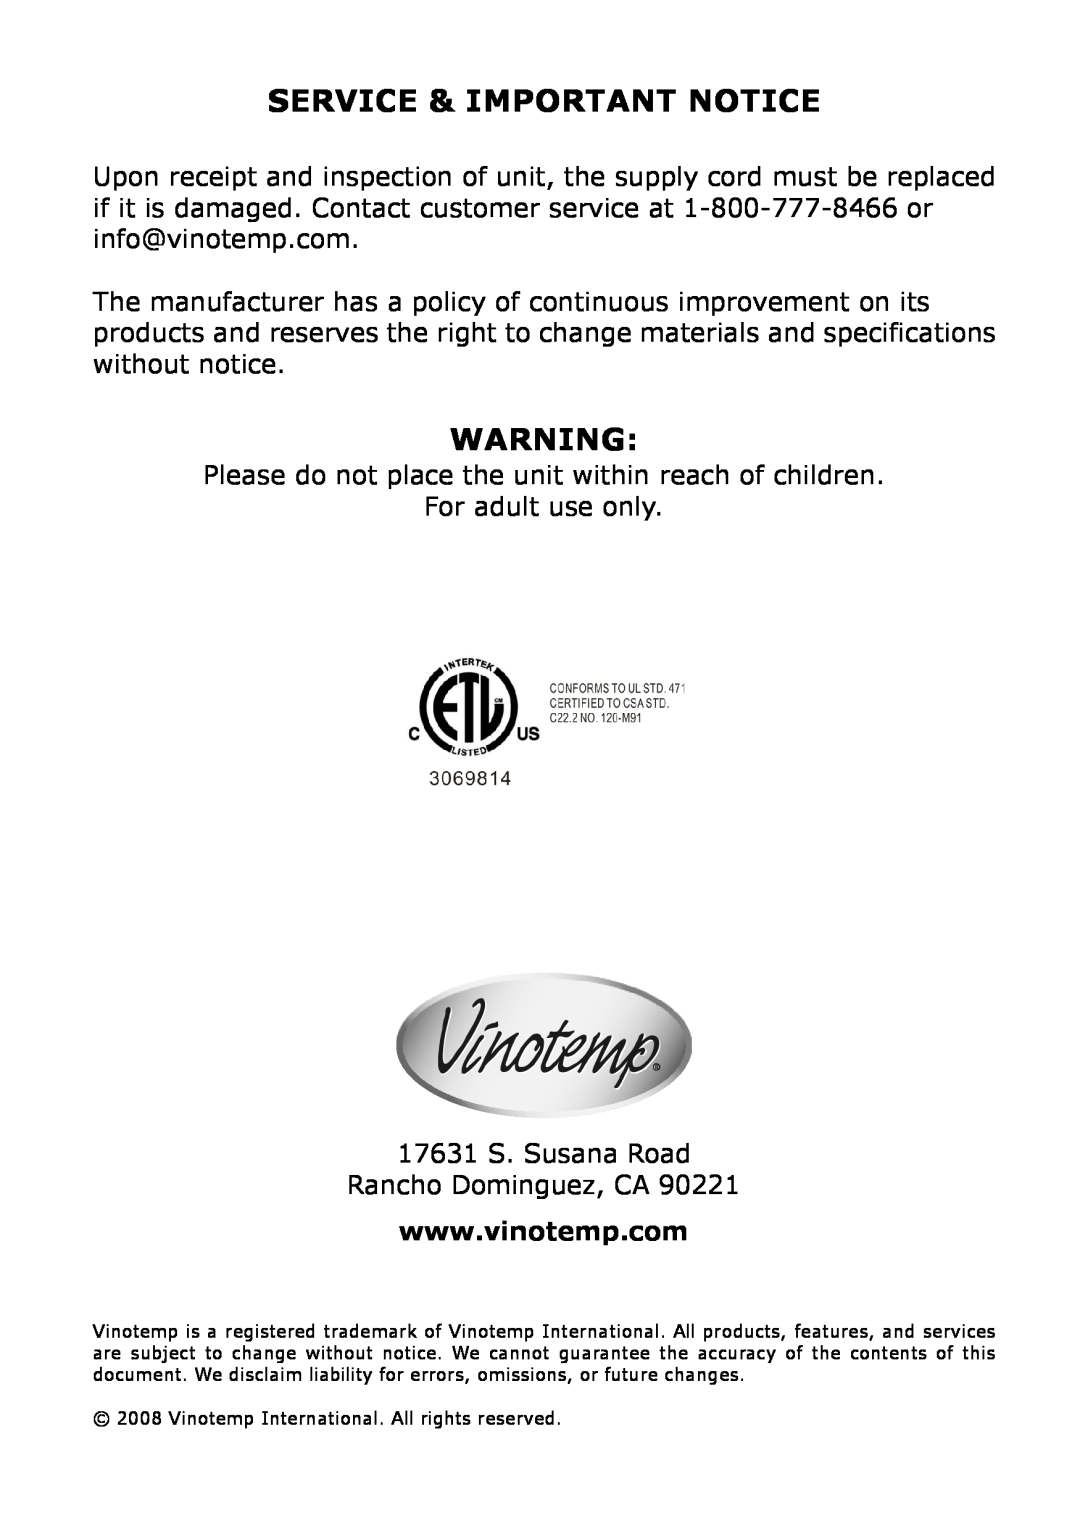 Vinotemp VT-36 owner manual Service & Important Notice 